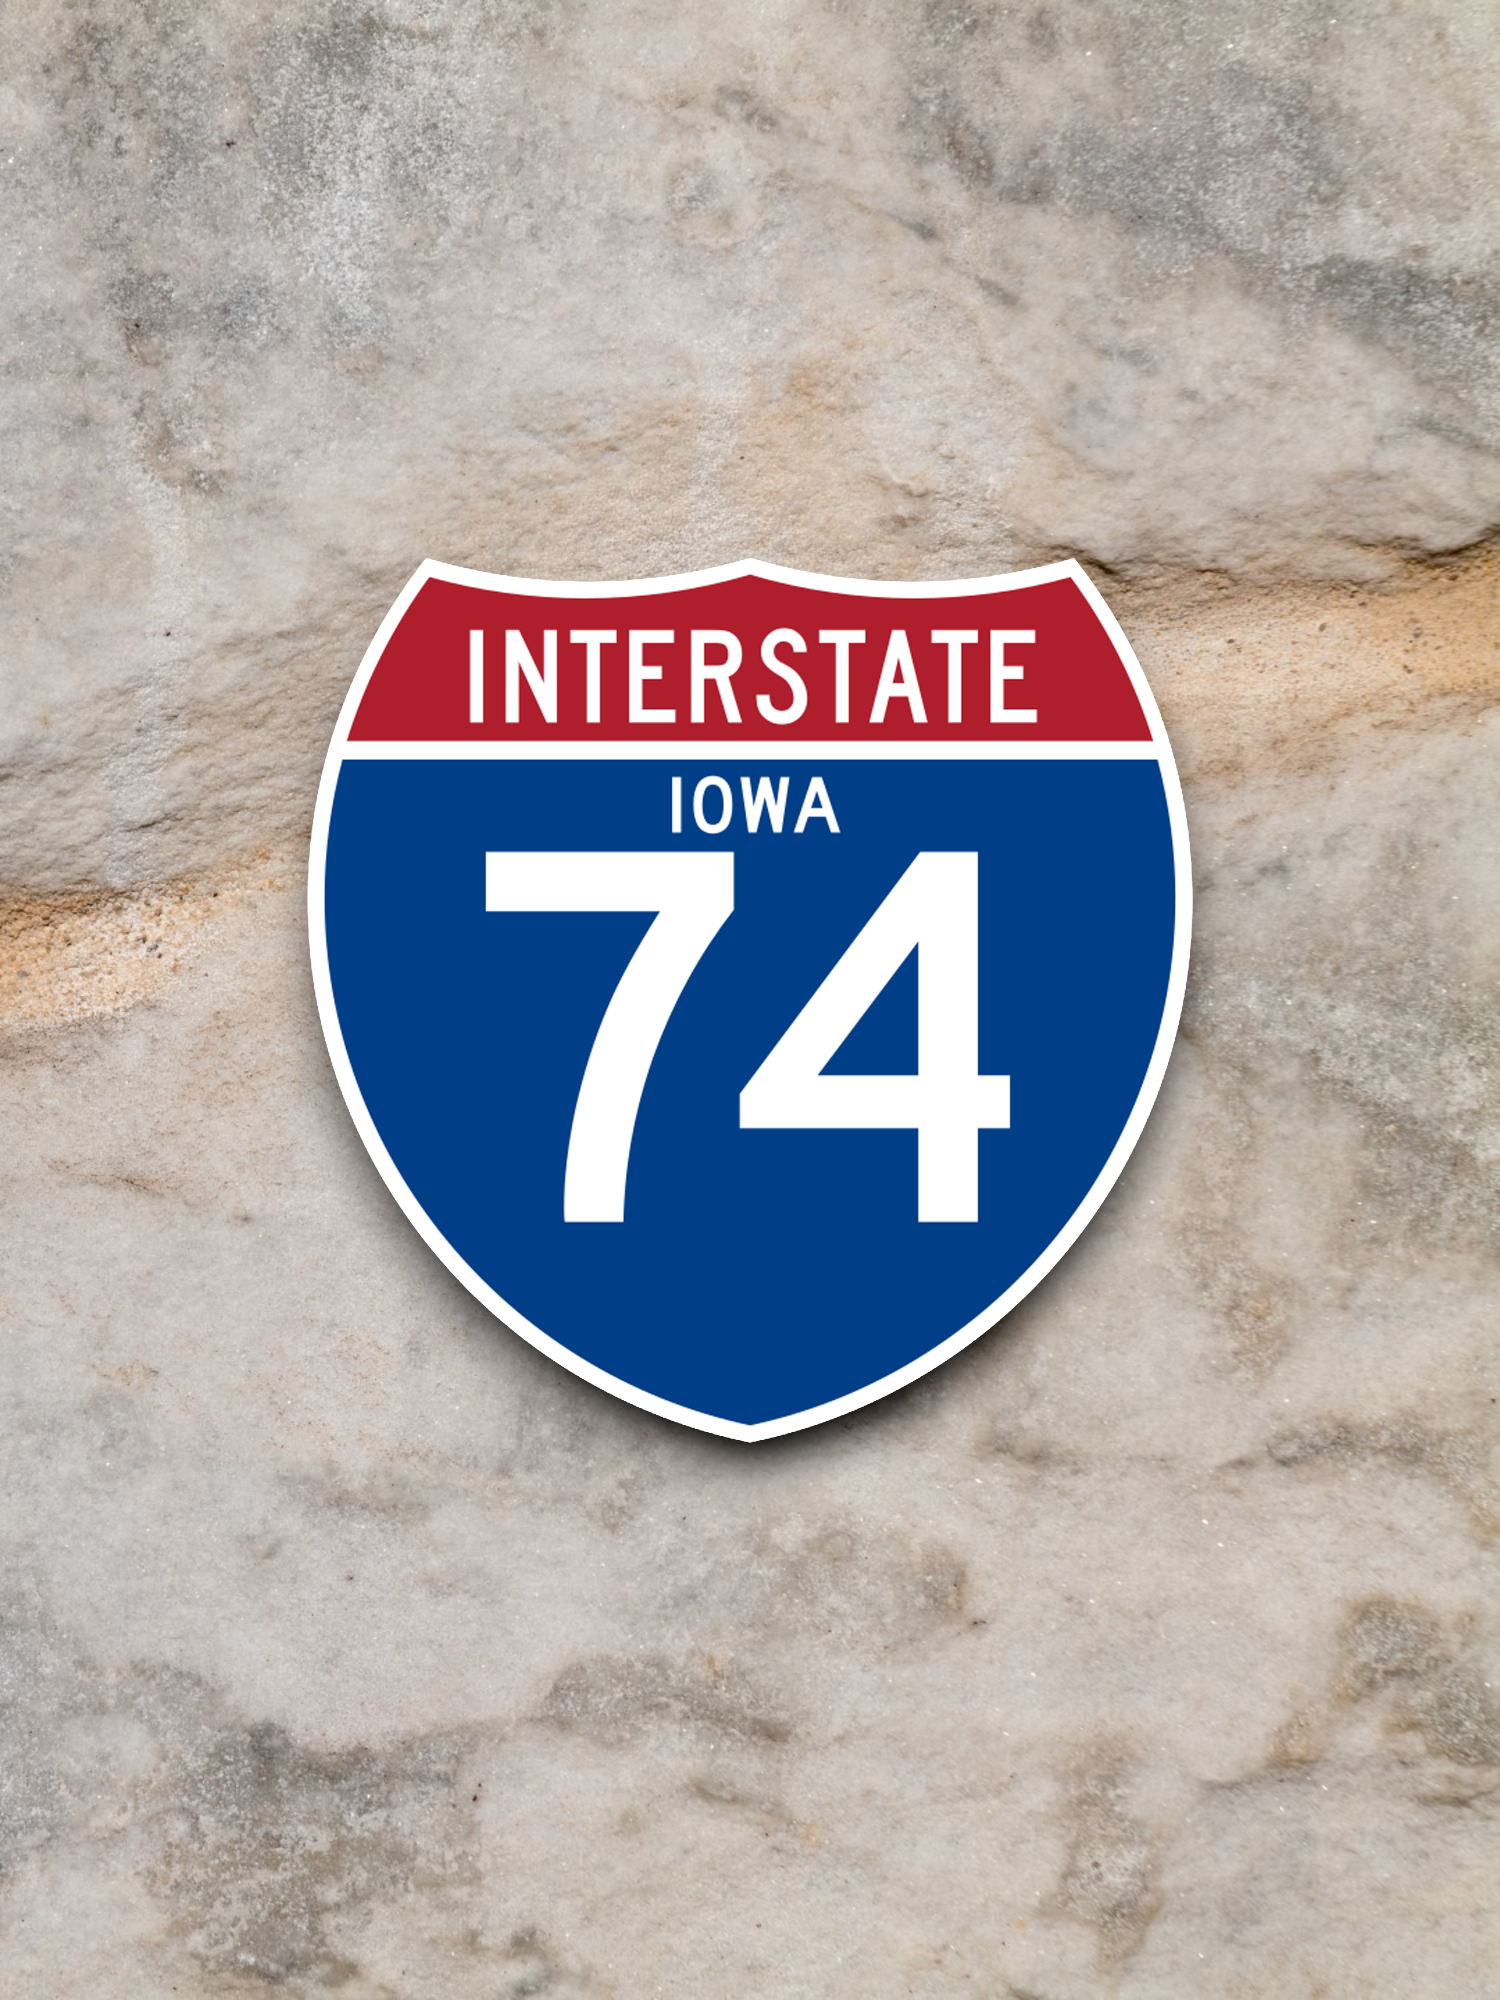 Interstate I-74 Iowa - Road Sign Sticker